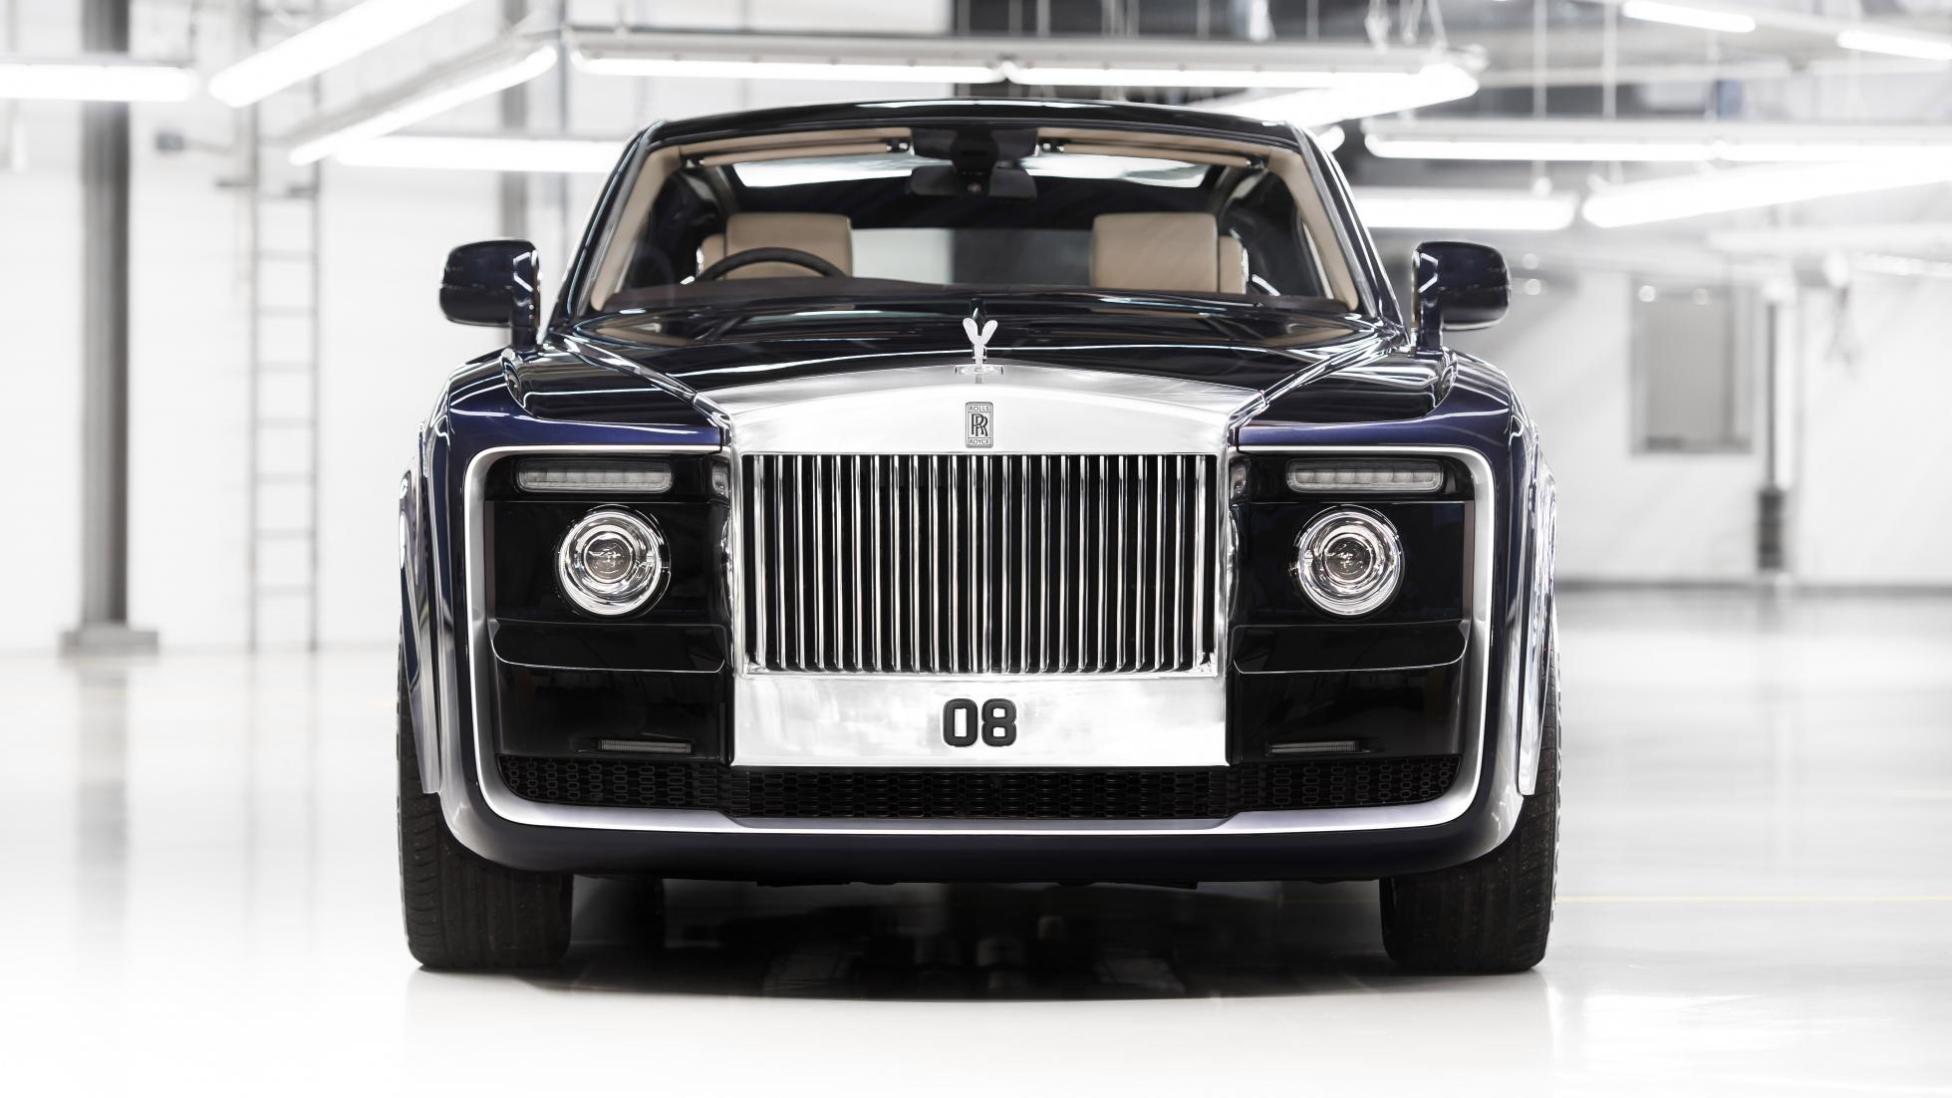 De Duurste Auto Ter Wereld Rolls Royce Sweptail Topgear 5796